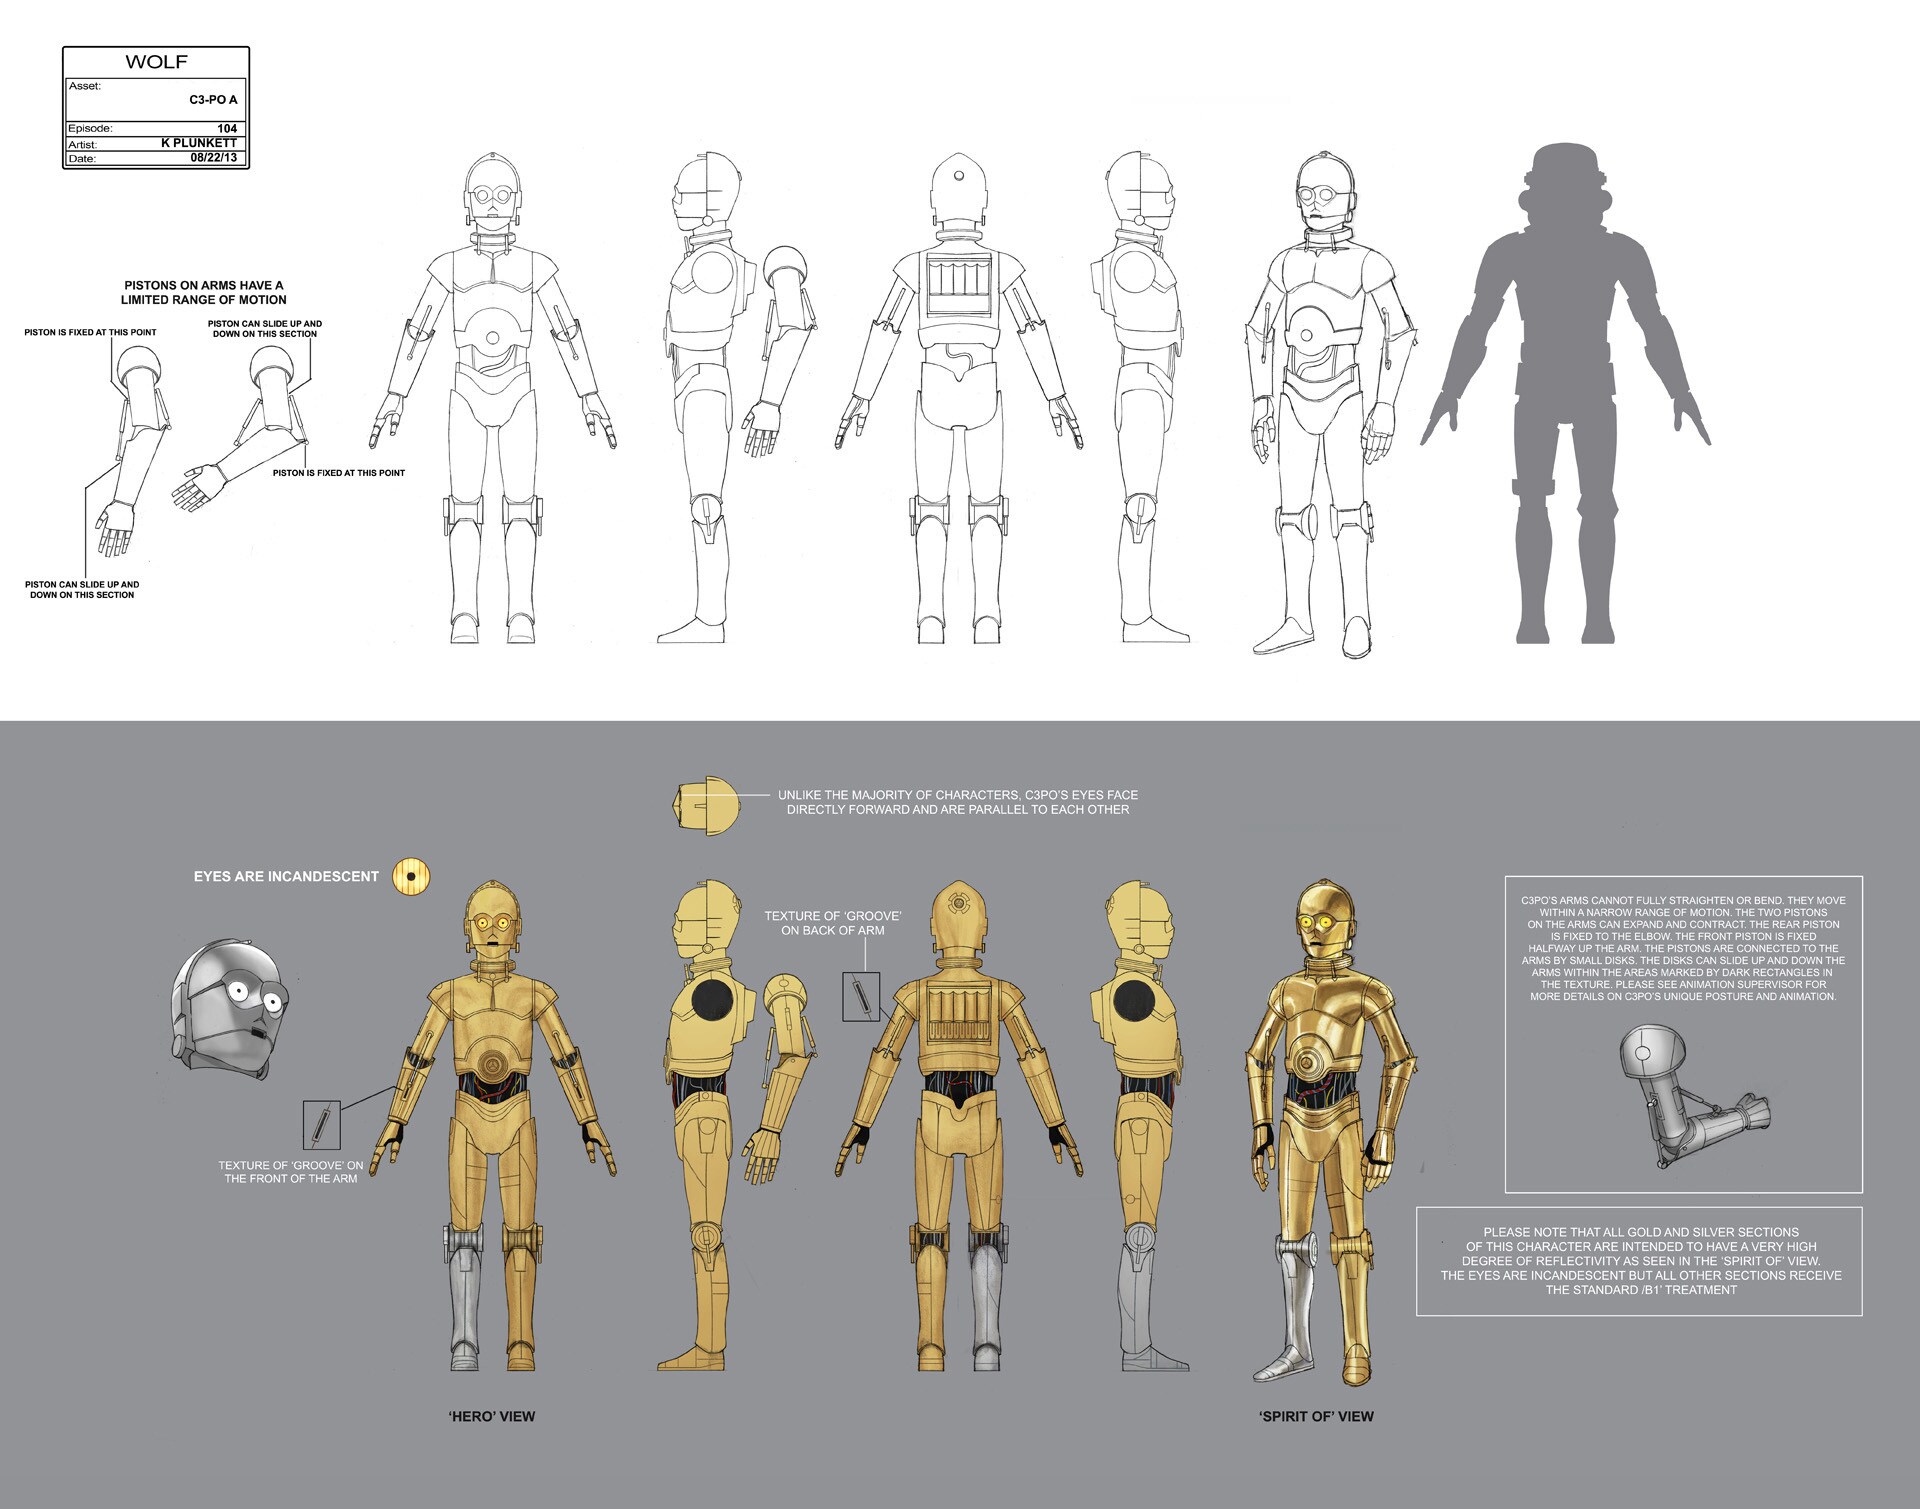 C-3PO full character illustration by Kilian Plunkett.